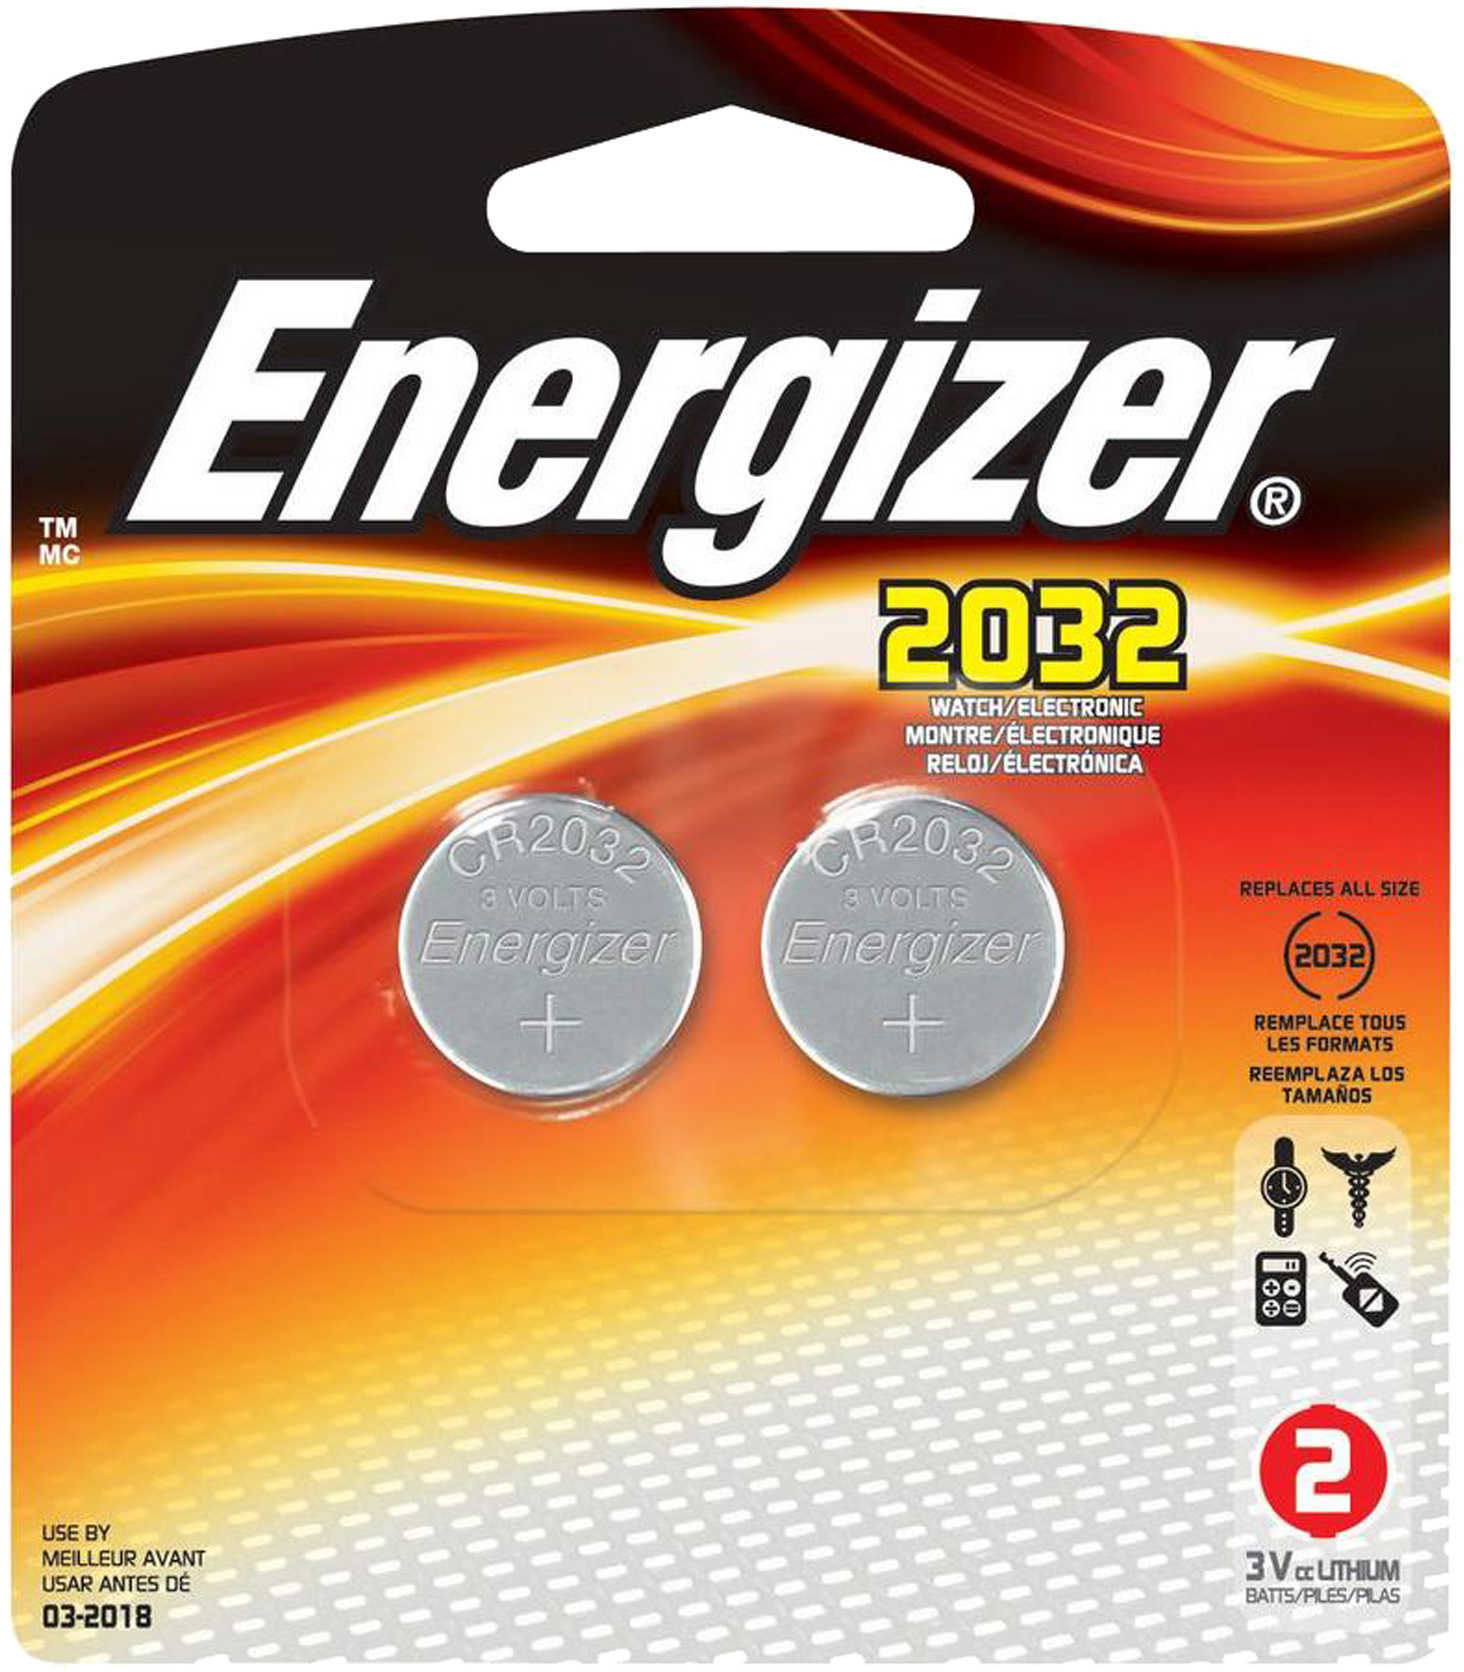 Energizer Lithium Coin #2032 3Volt (2-pack) 2032BP-2